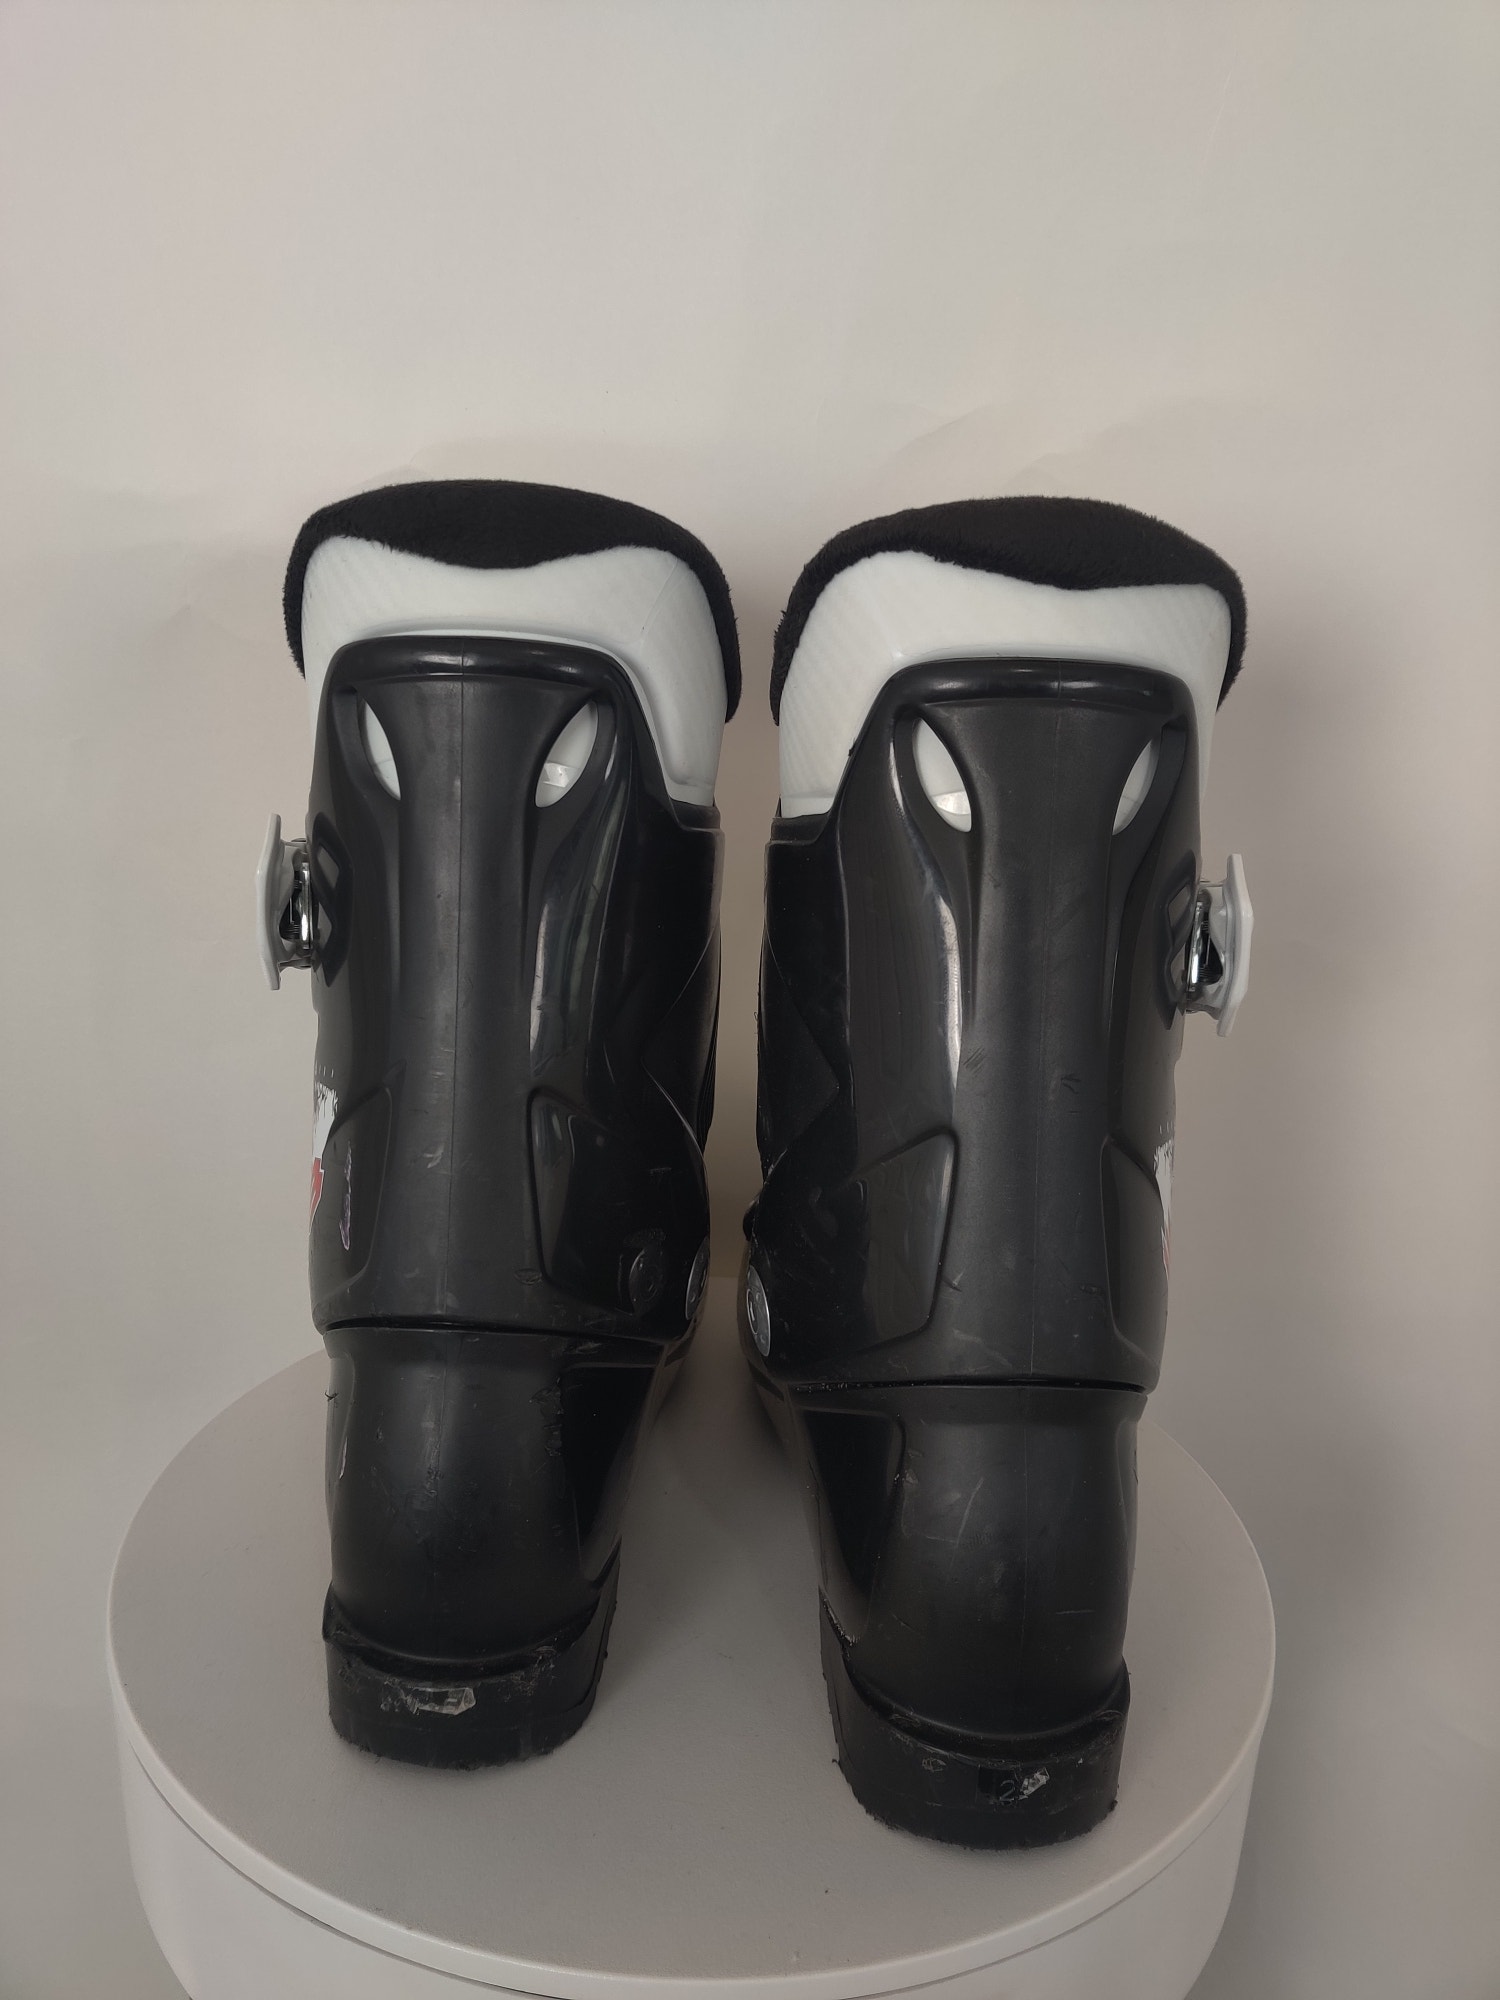 Tecnica JT 3 Jr 25.5-26.5 Mondo Kids Snow Ski Boots 305 mm black/white - Picture 9 of 11